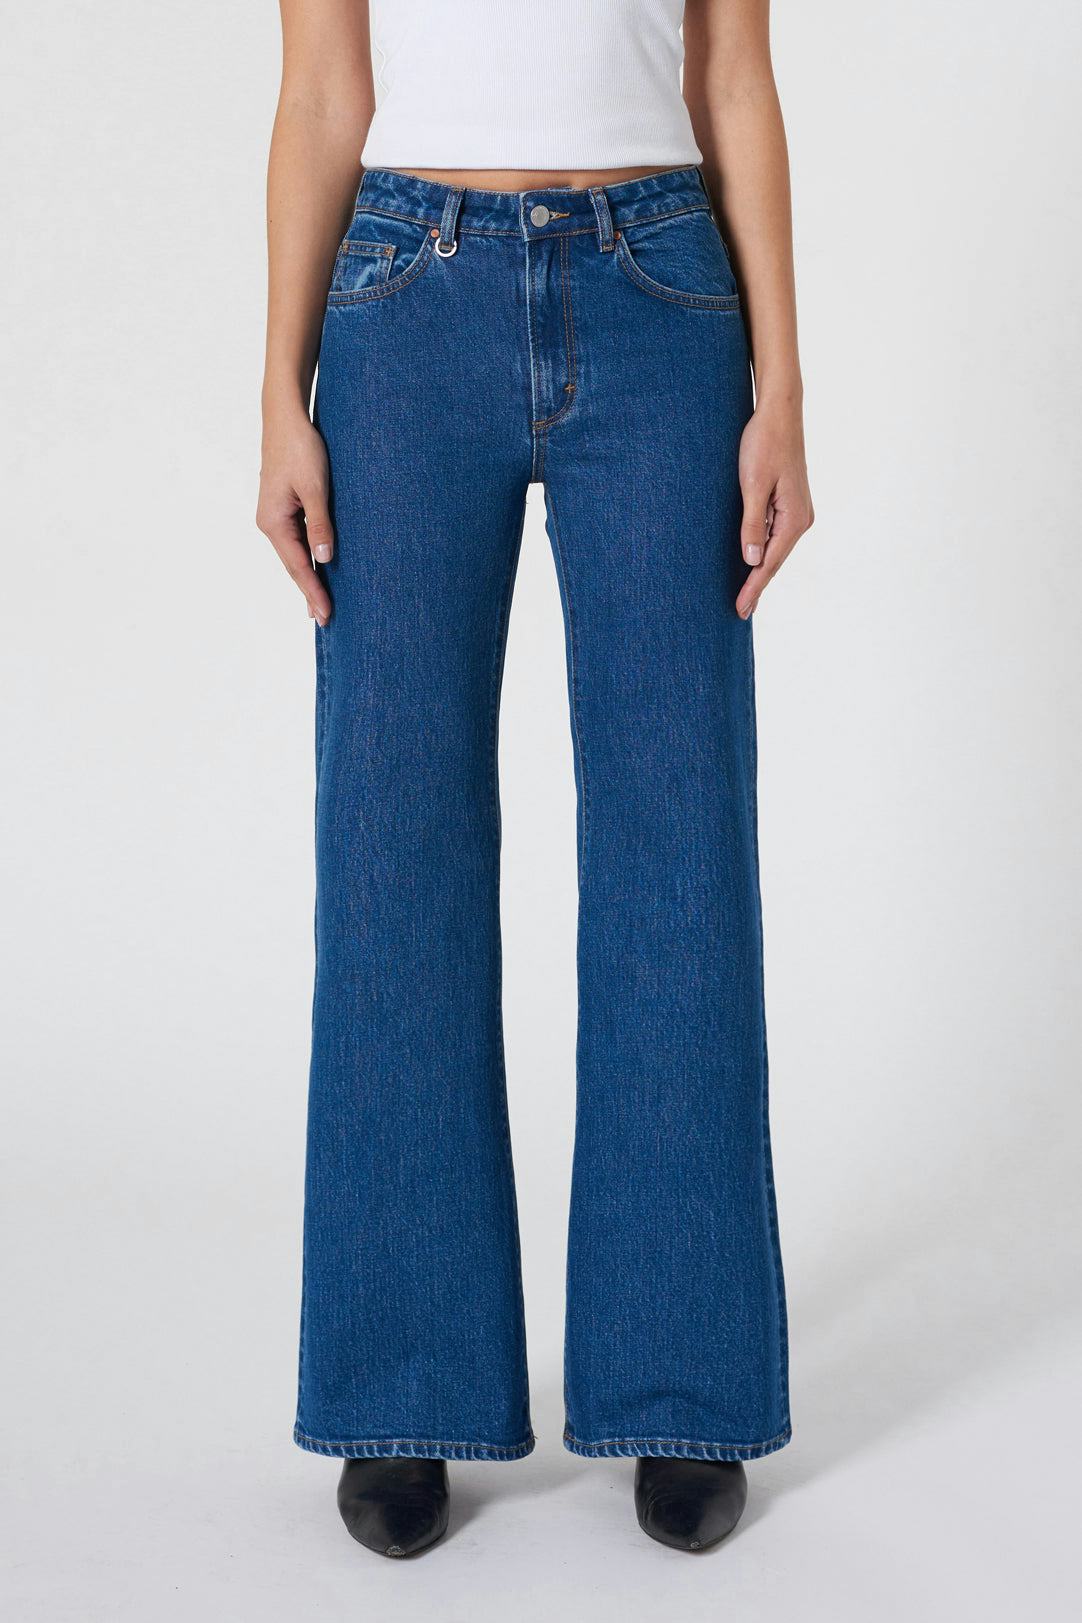 Buy Women's Jeans Online